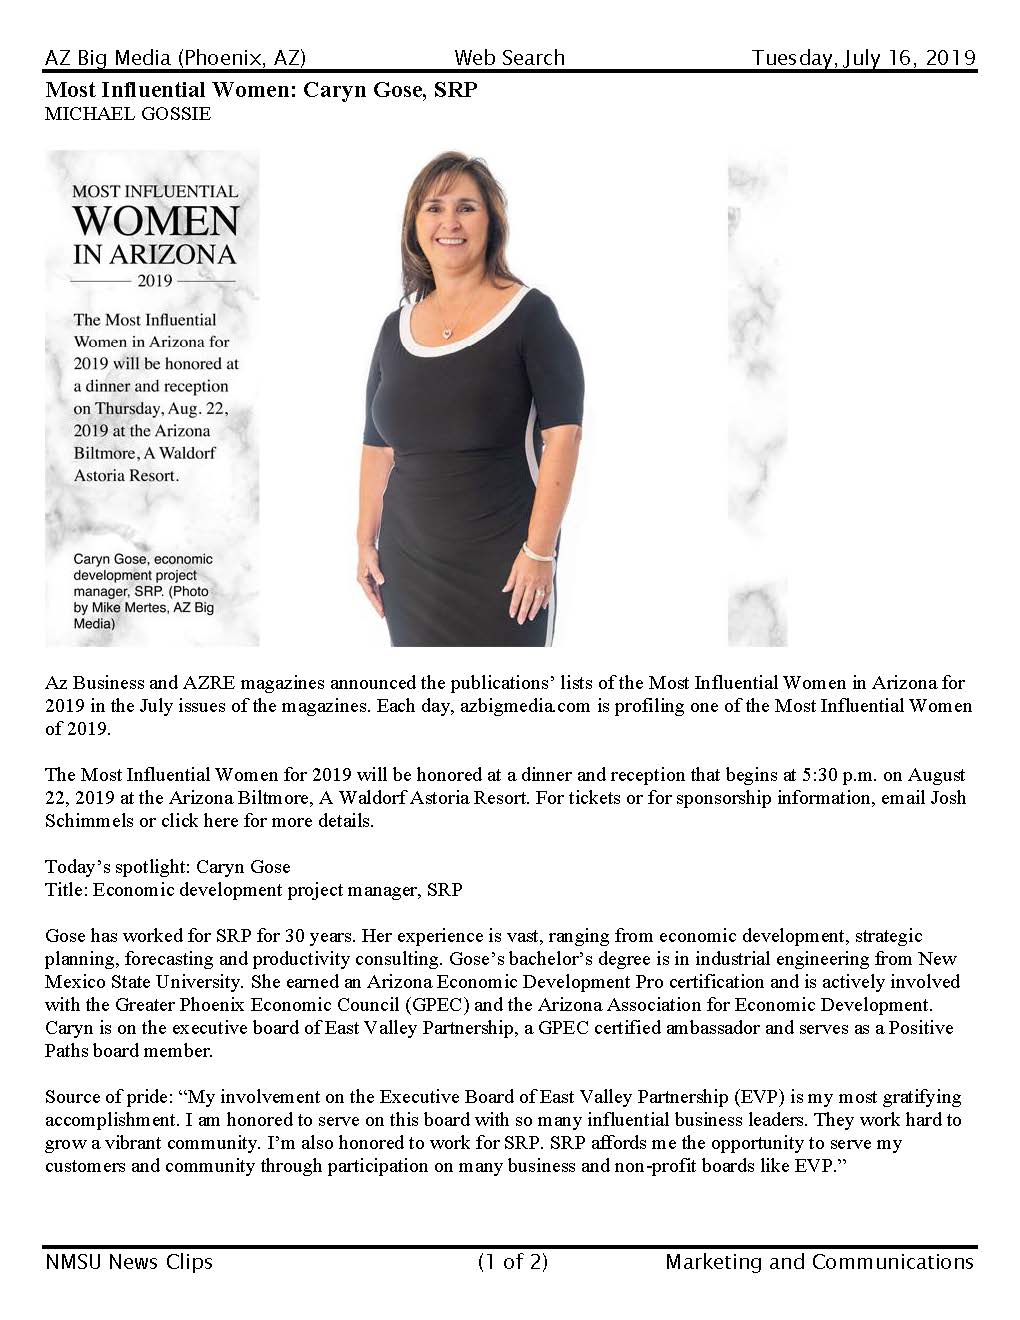 arizona_20190716_Most-influential-women-Caryn-Gose-SRP_Page_1.jpg